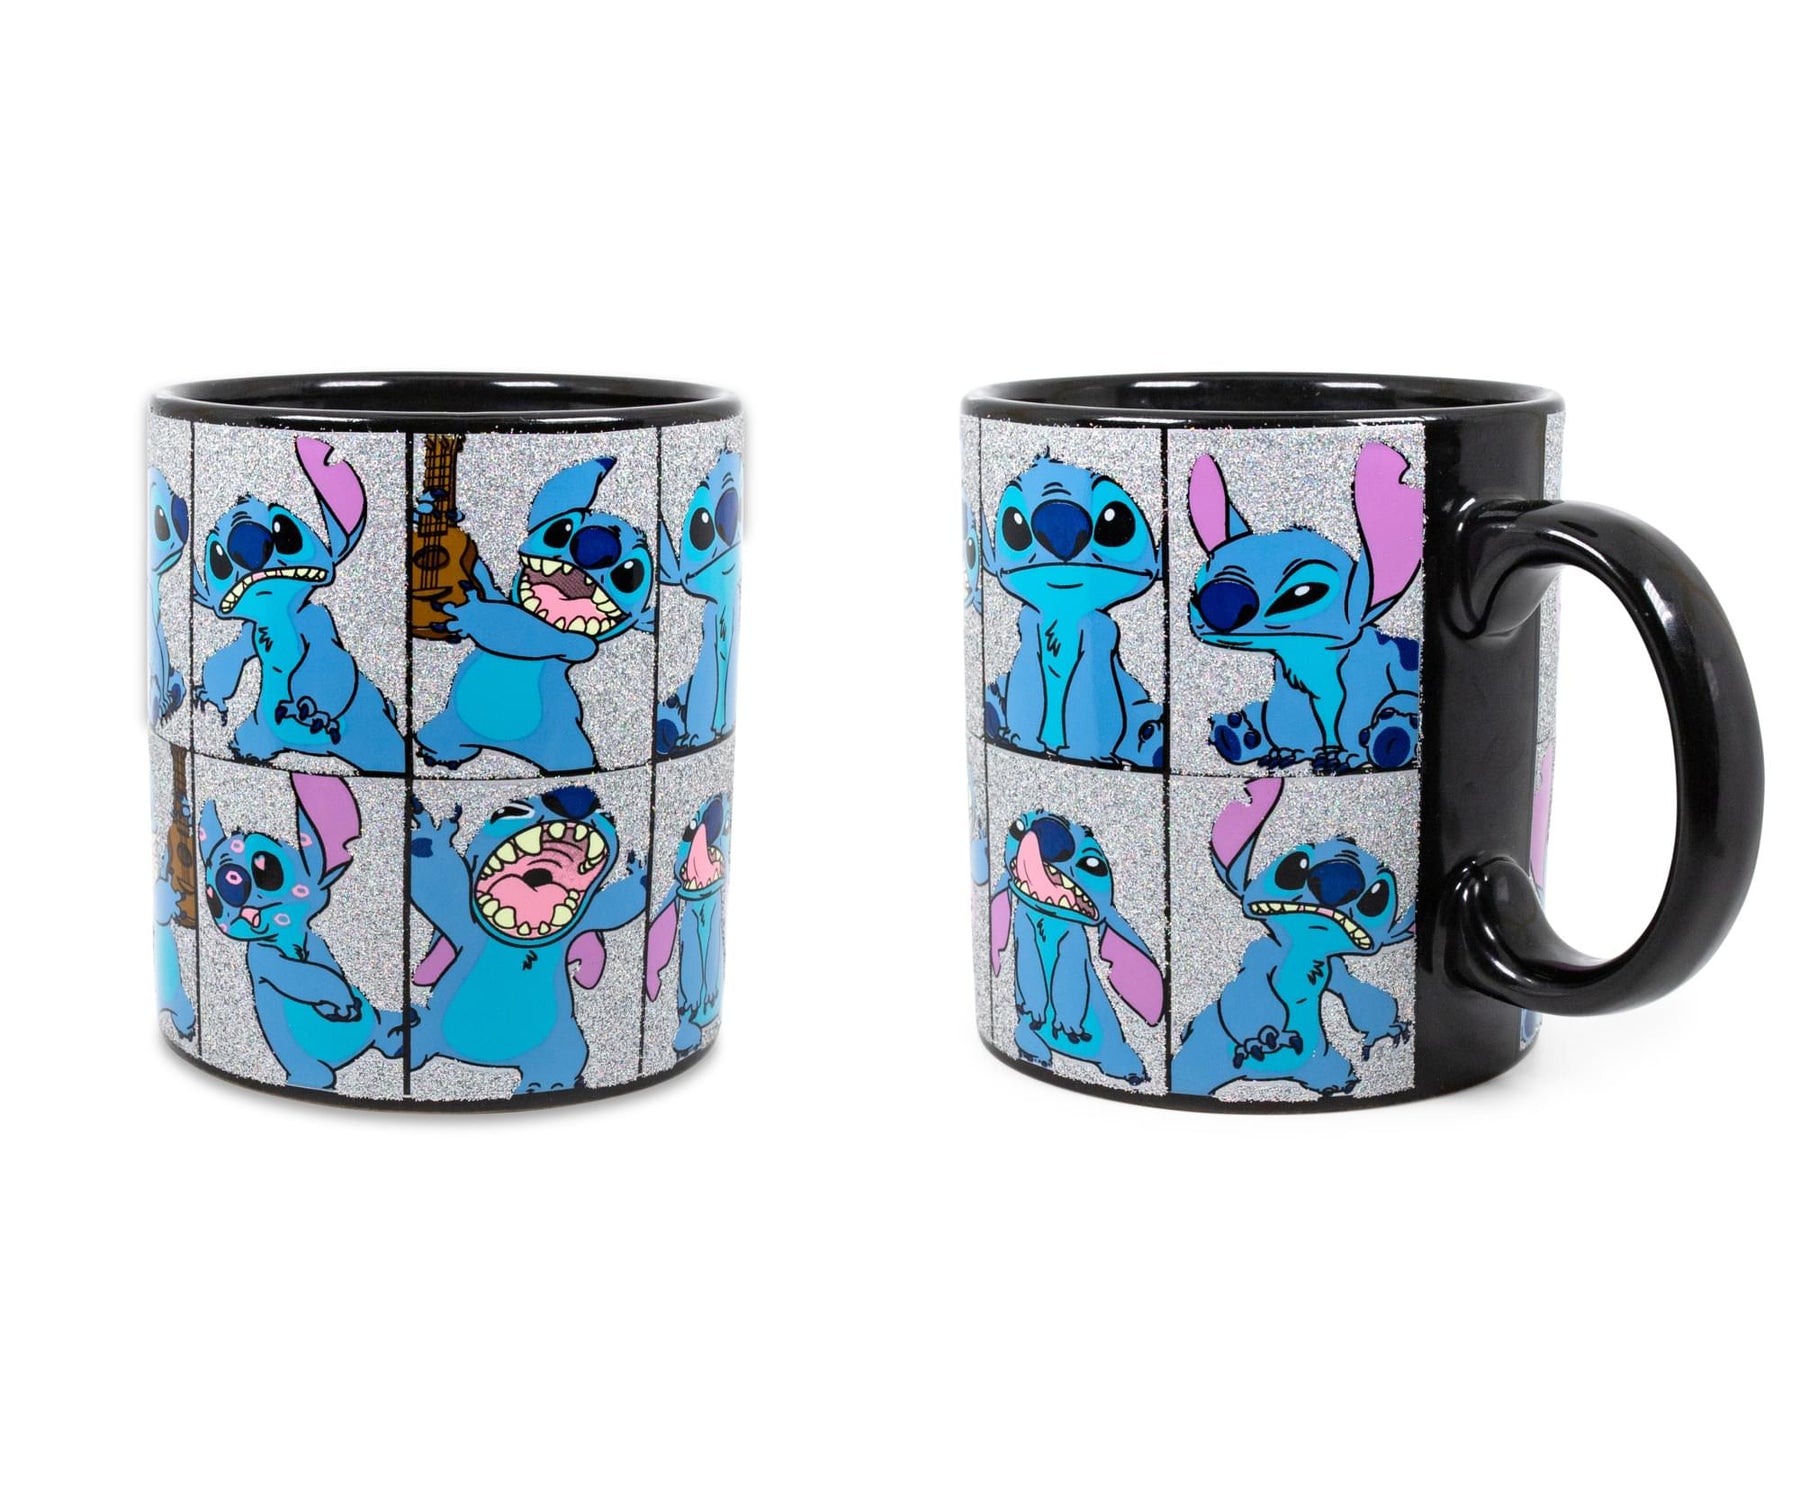 Disney Lilo & Stitch Mug 11 oz, سكويقلز